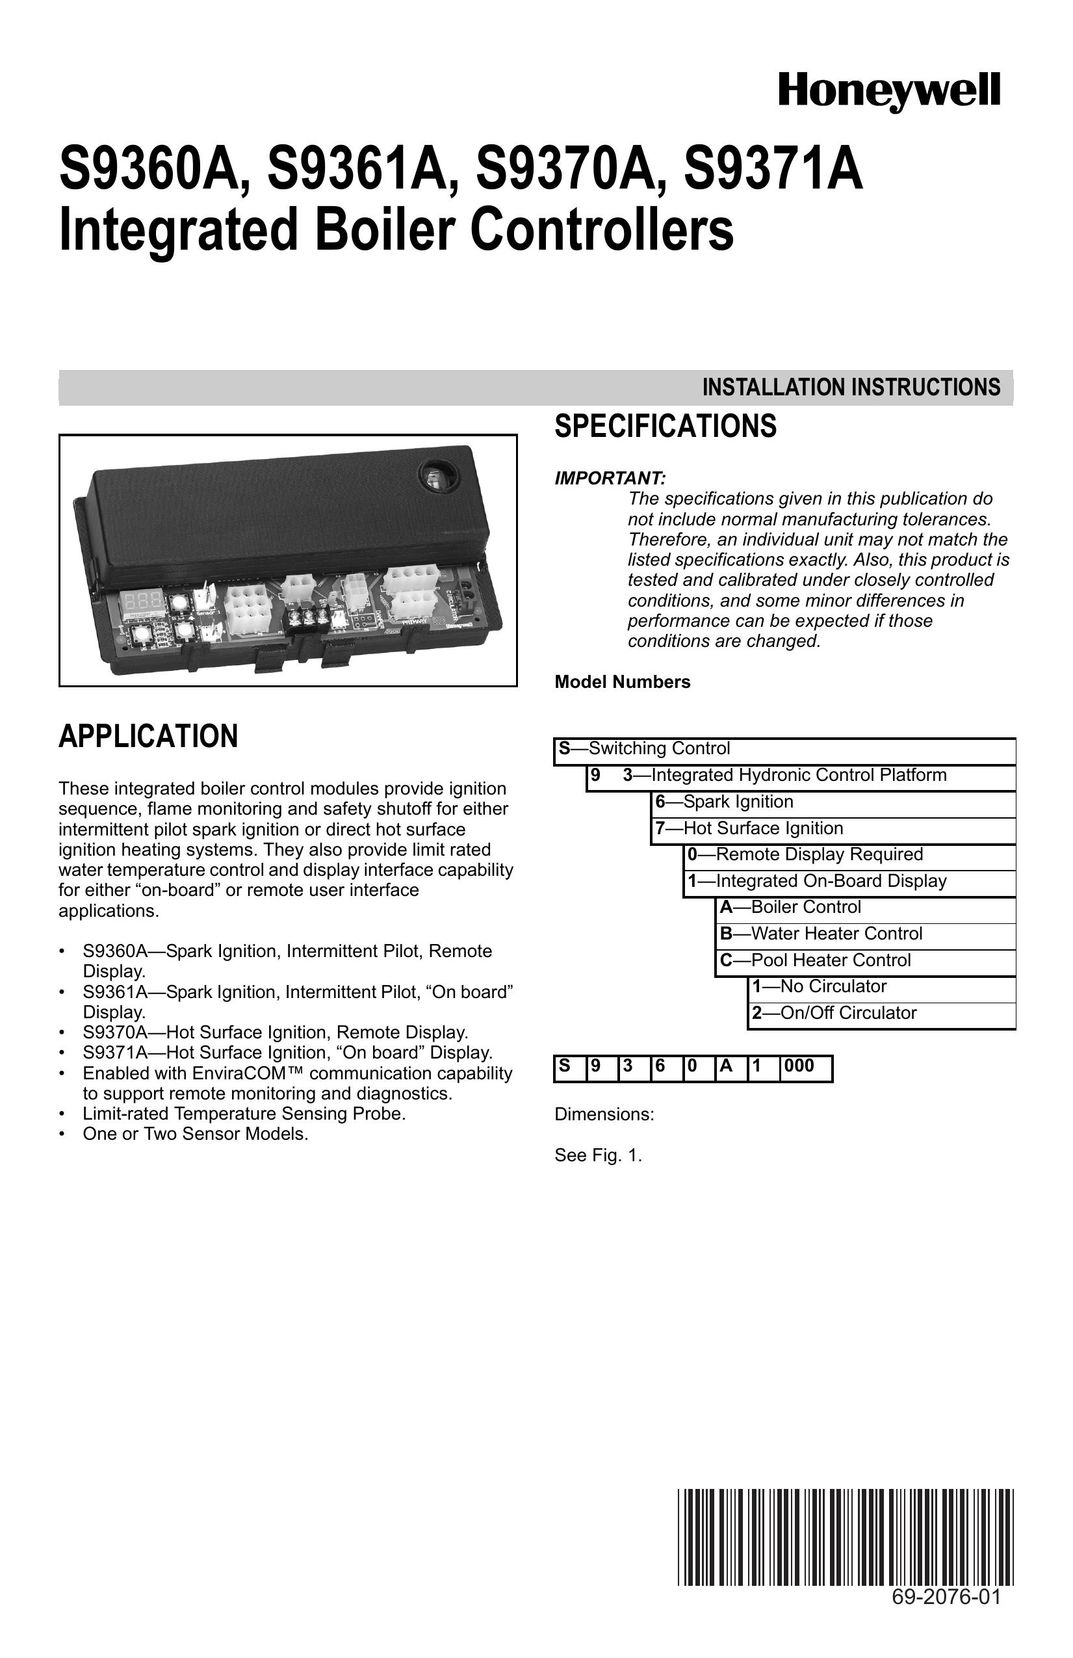 Honeywell S9361A Boiler User Manual